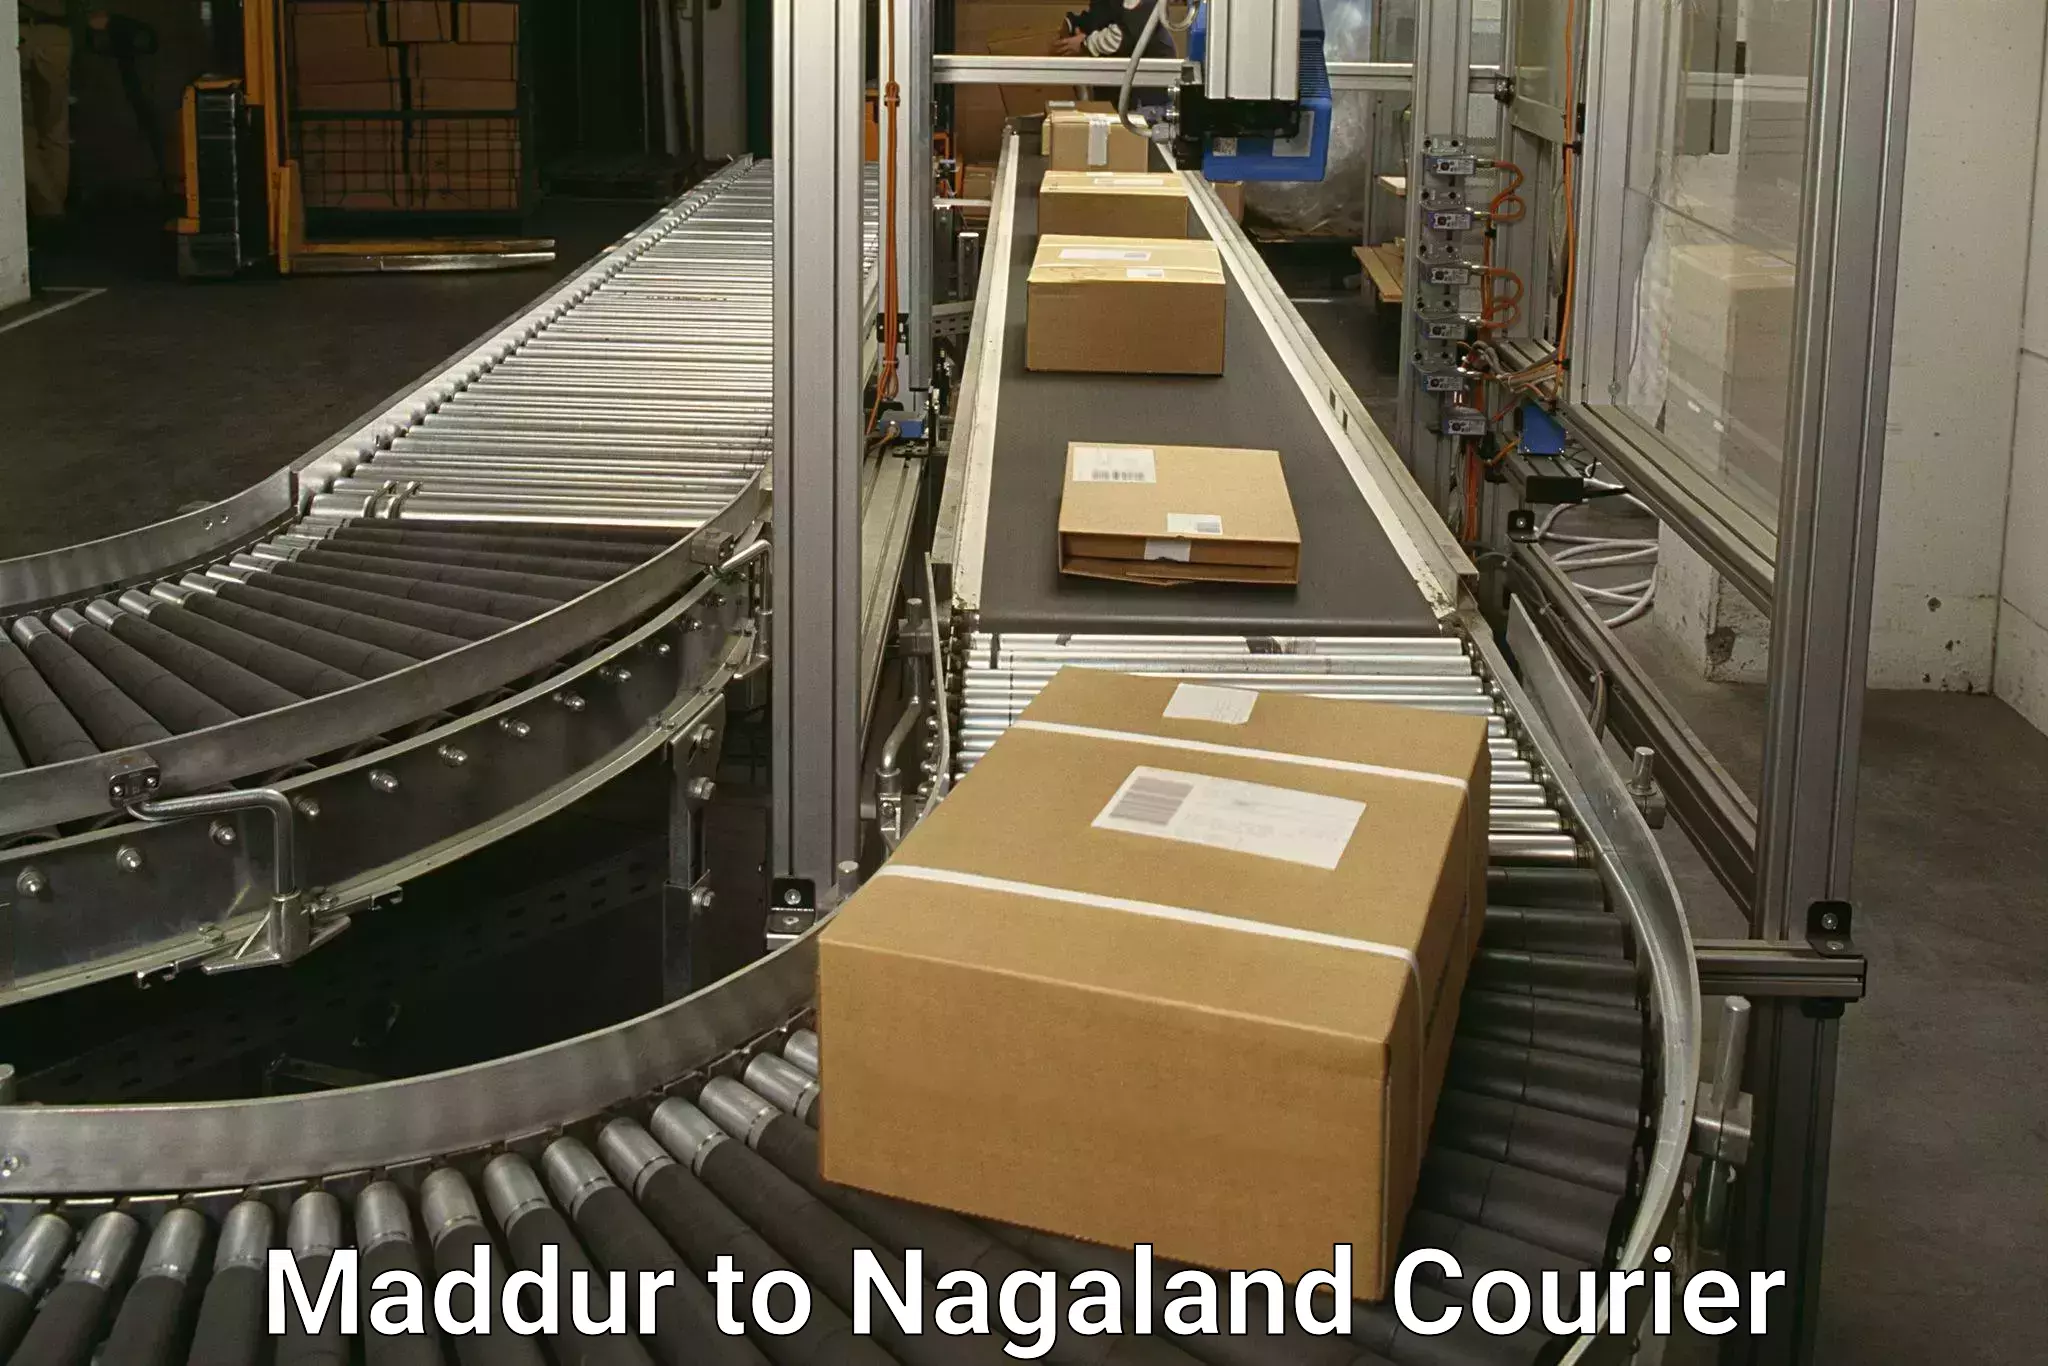 International parcel service Maddur to Dimapur